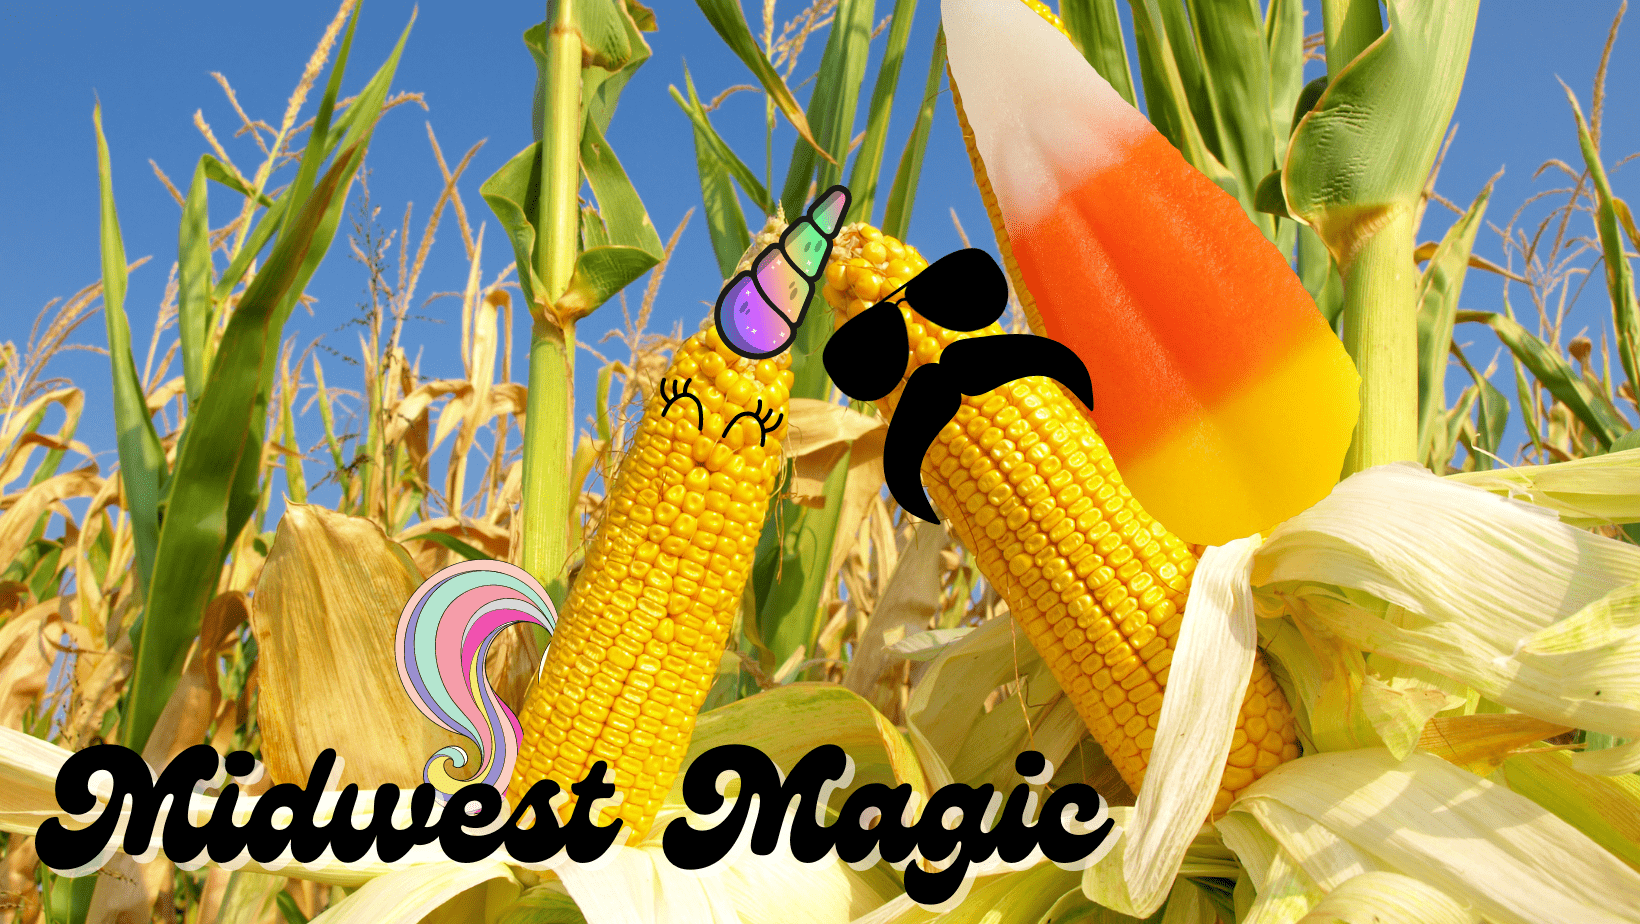 Corn-e Midwest Magic 